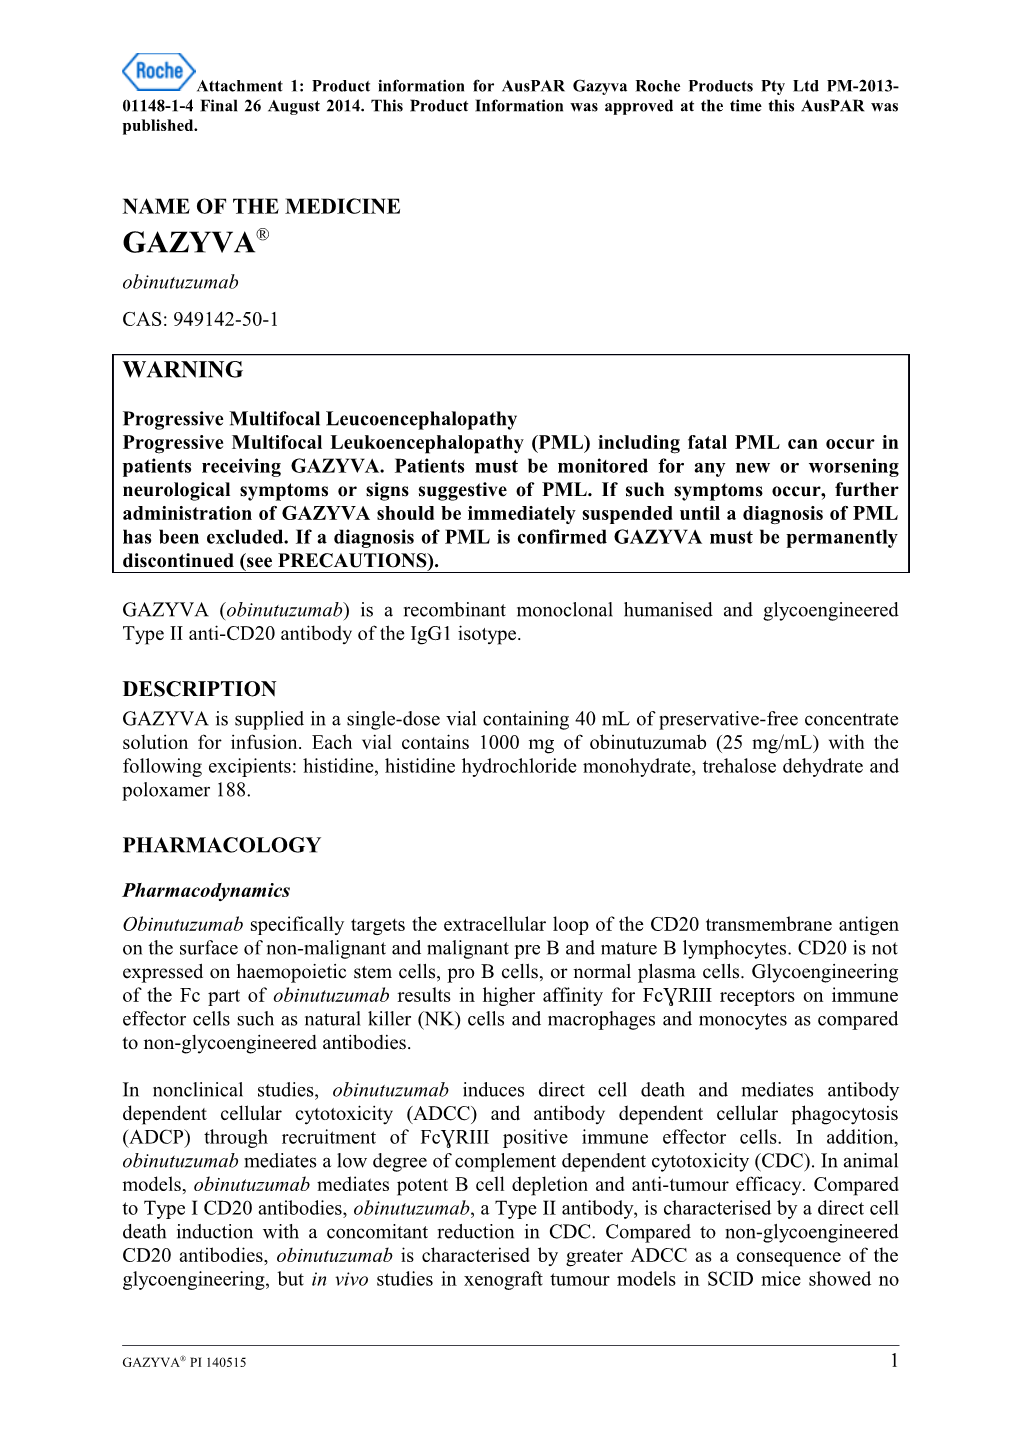 Auspar Attachment 1: Product Information for Gazyva